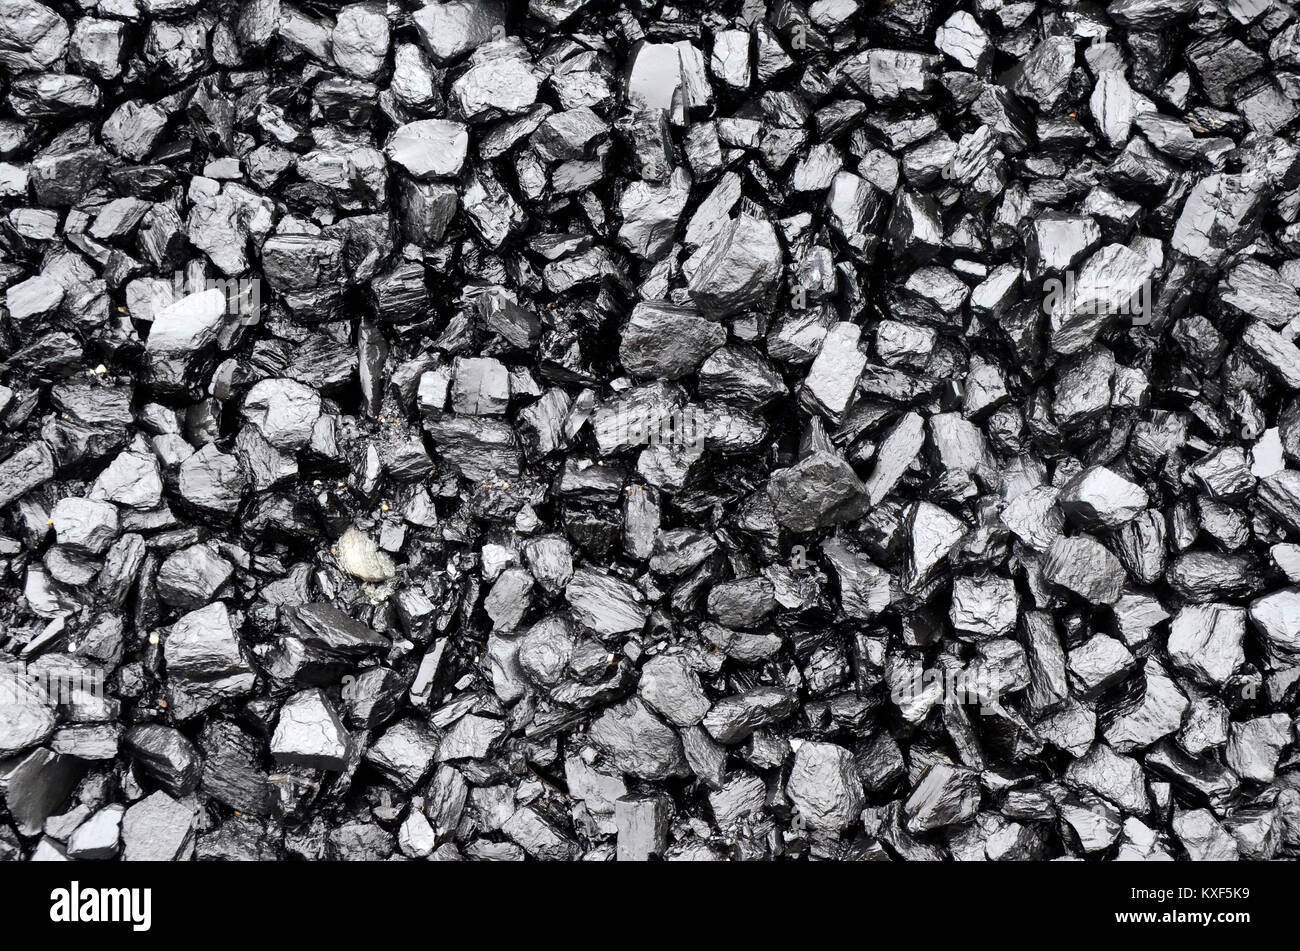 Pile of black coal Stock Photo